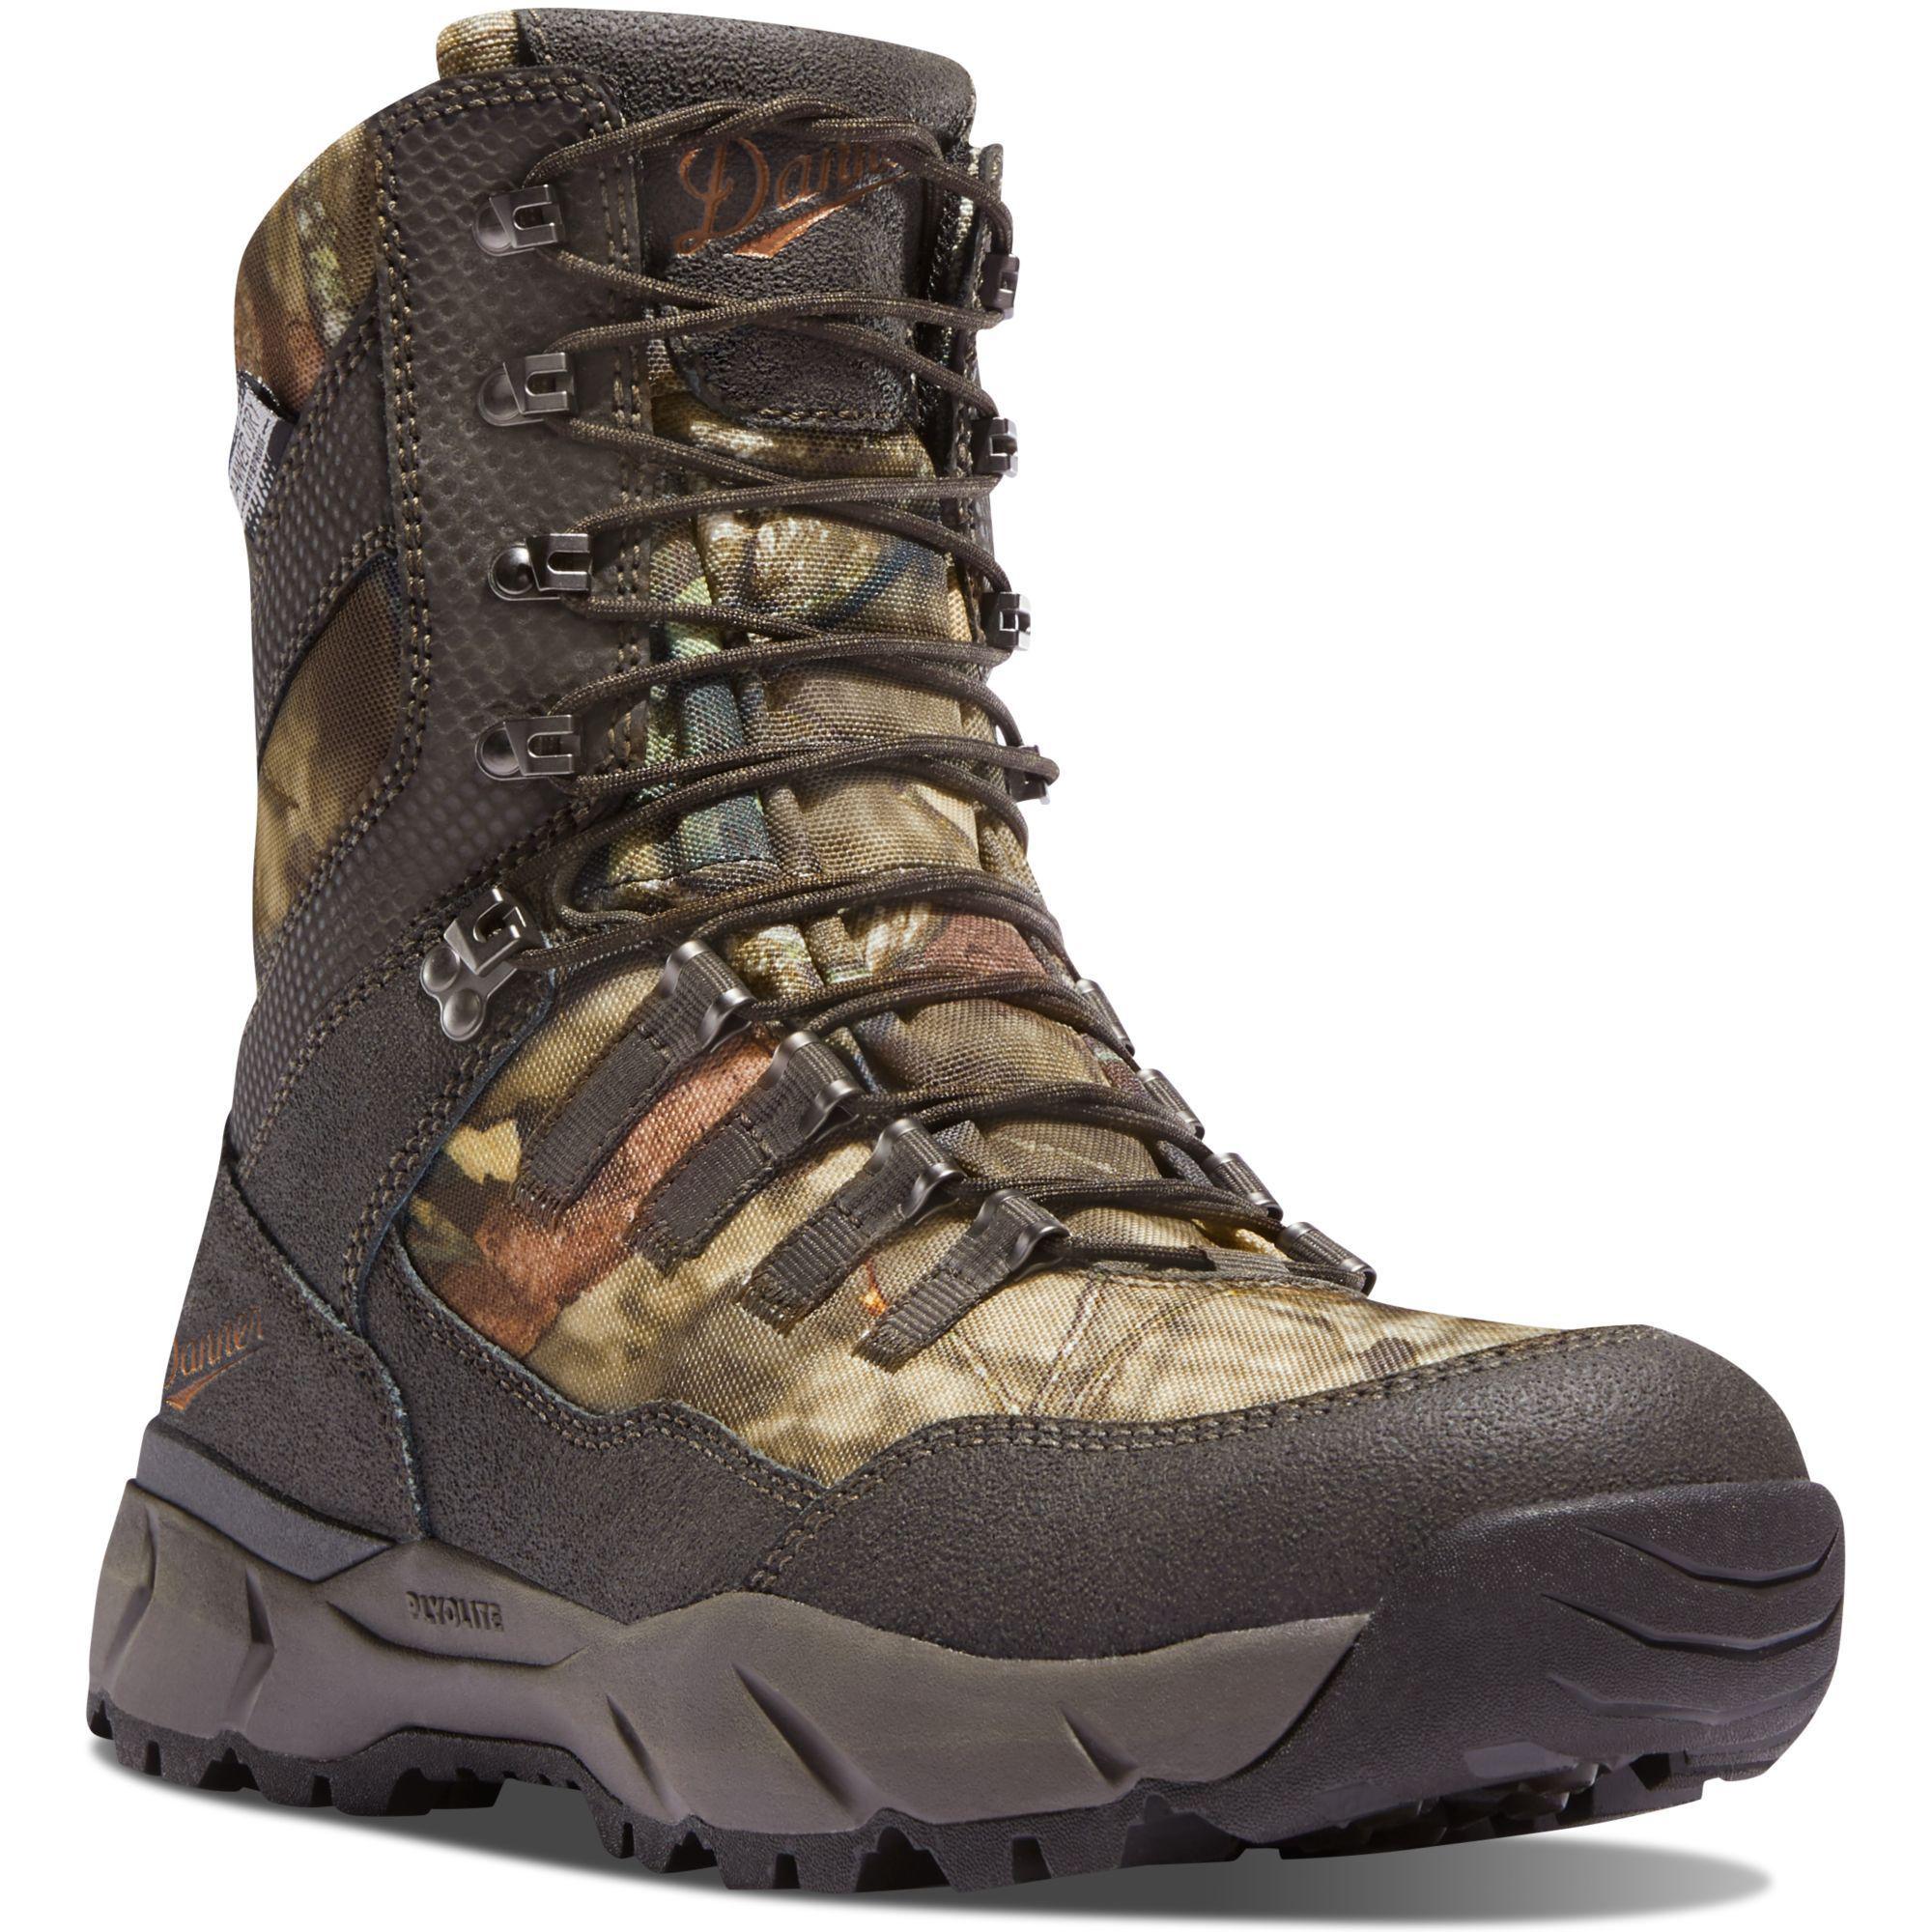 Danner Men's Vital 8" 400G Insulated WP Hunt Boot - Mossy Oak - 41552 7 / Medium / Mossy Oak - Overlook Boots